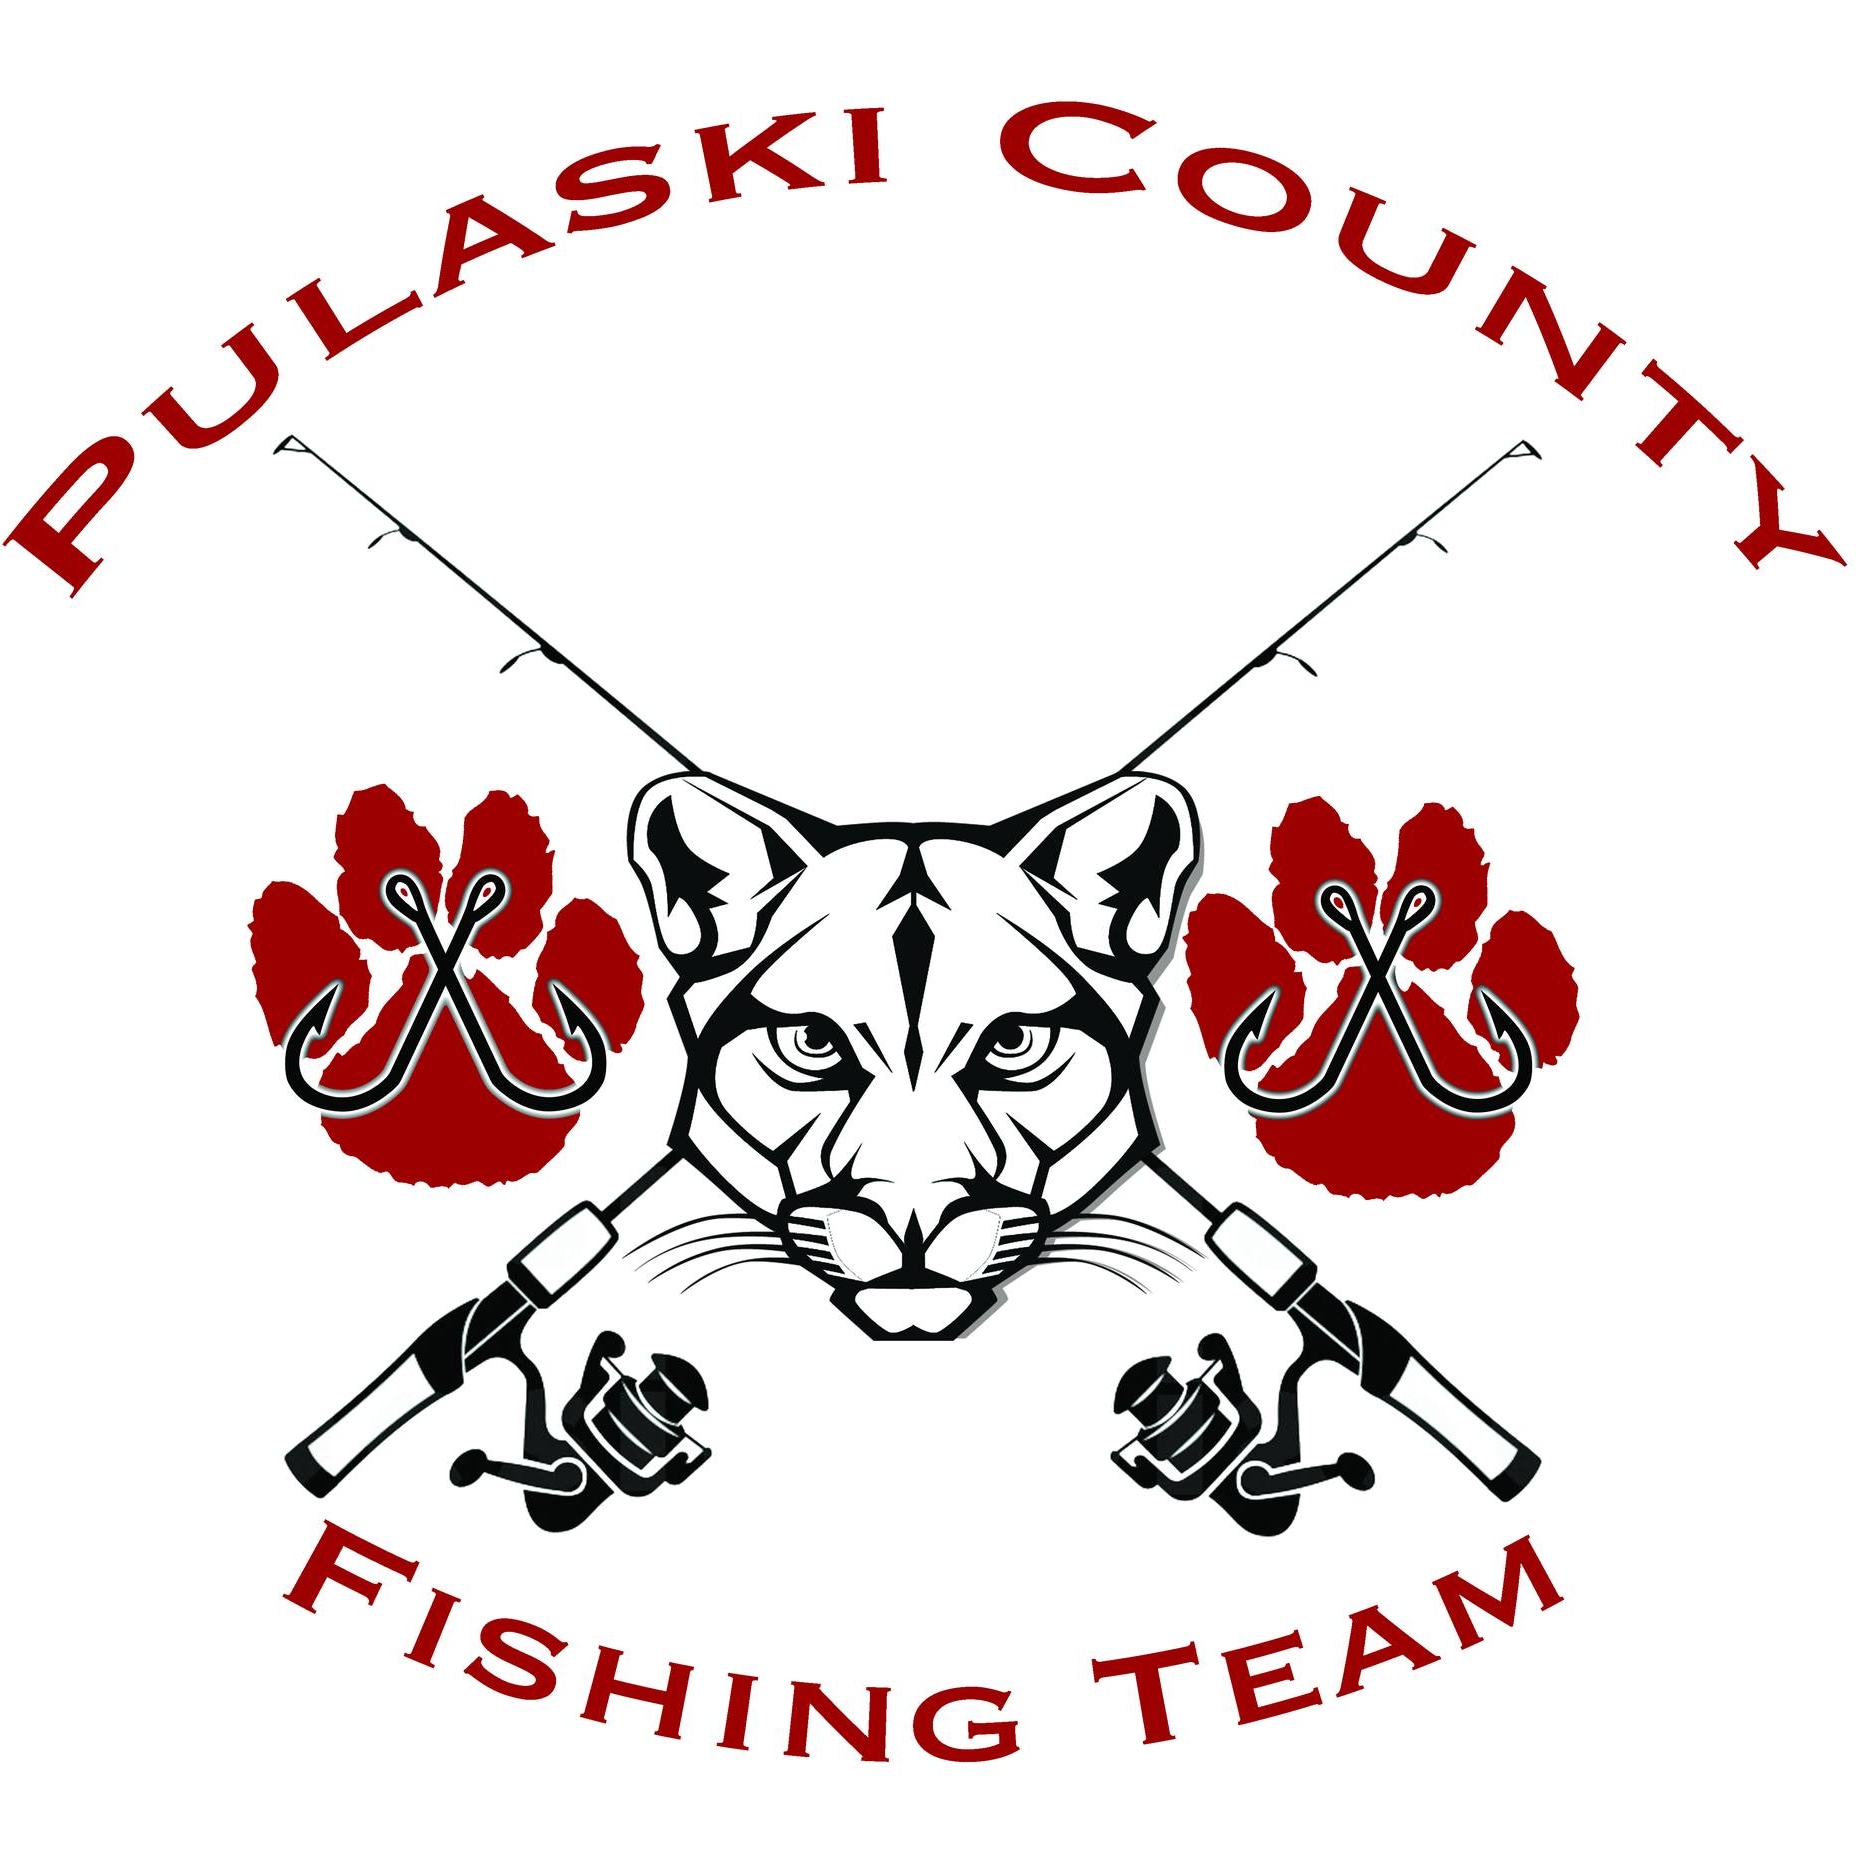 fishing team logo